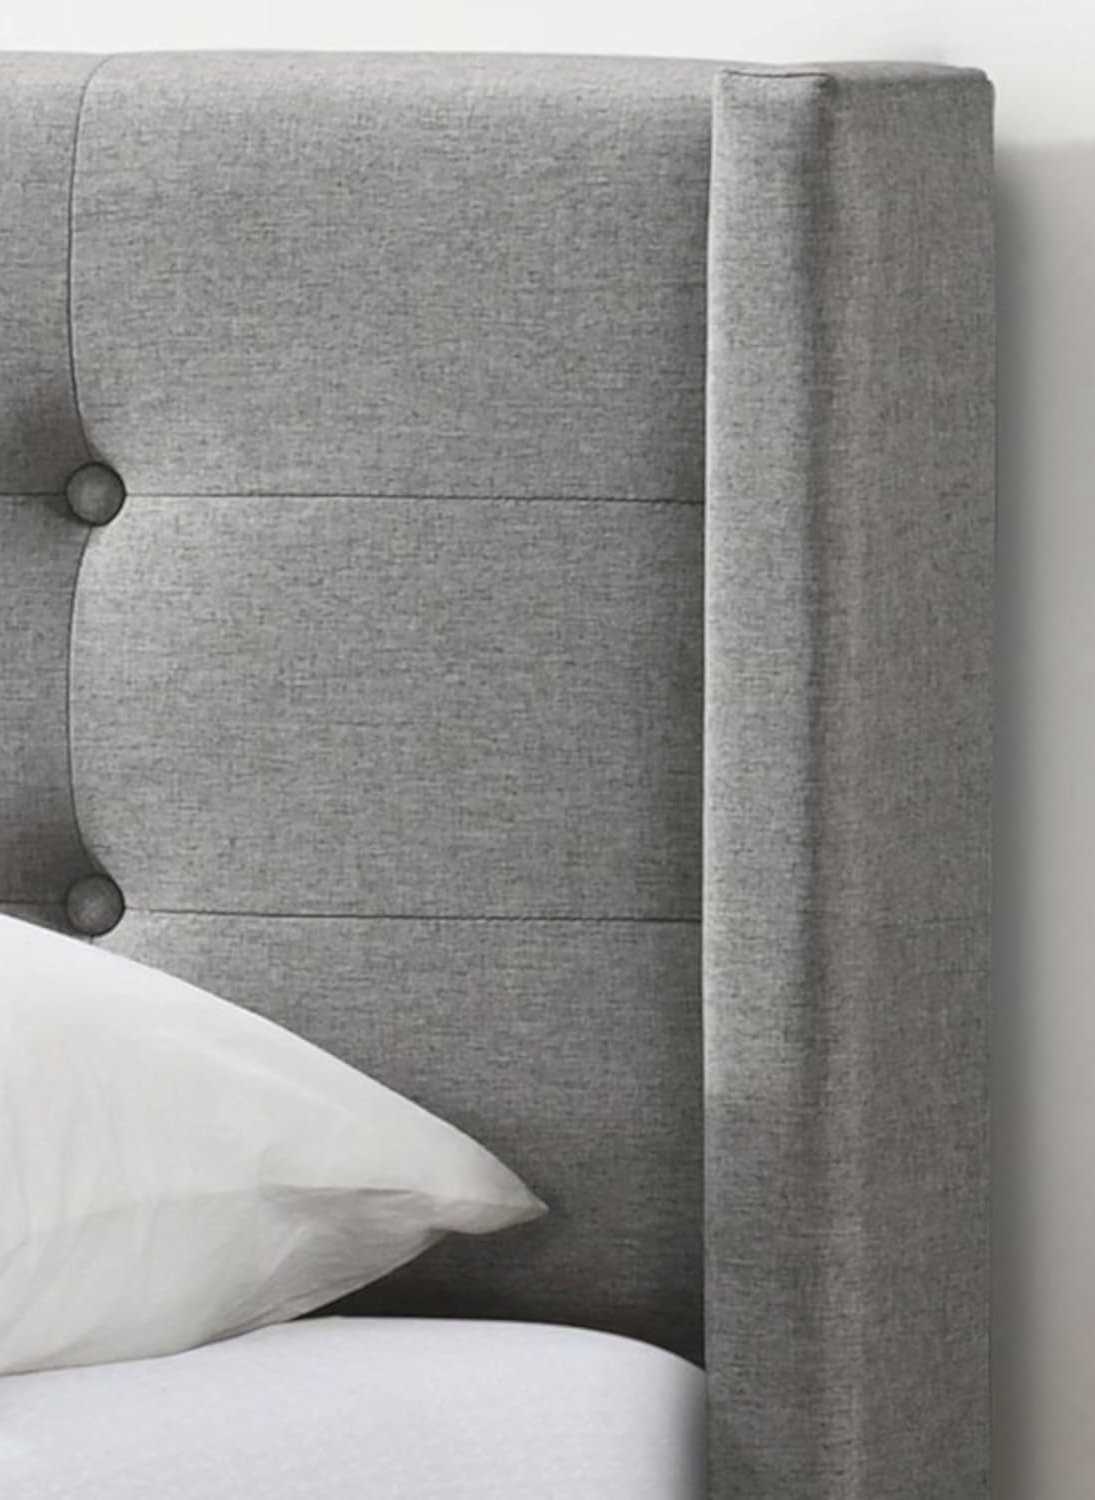 Grey Platform Fabric Bed 5270